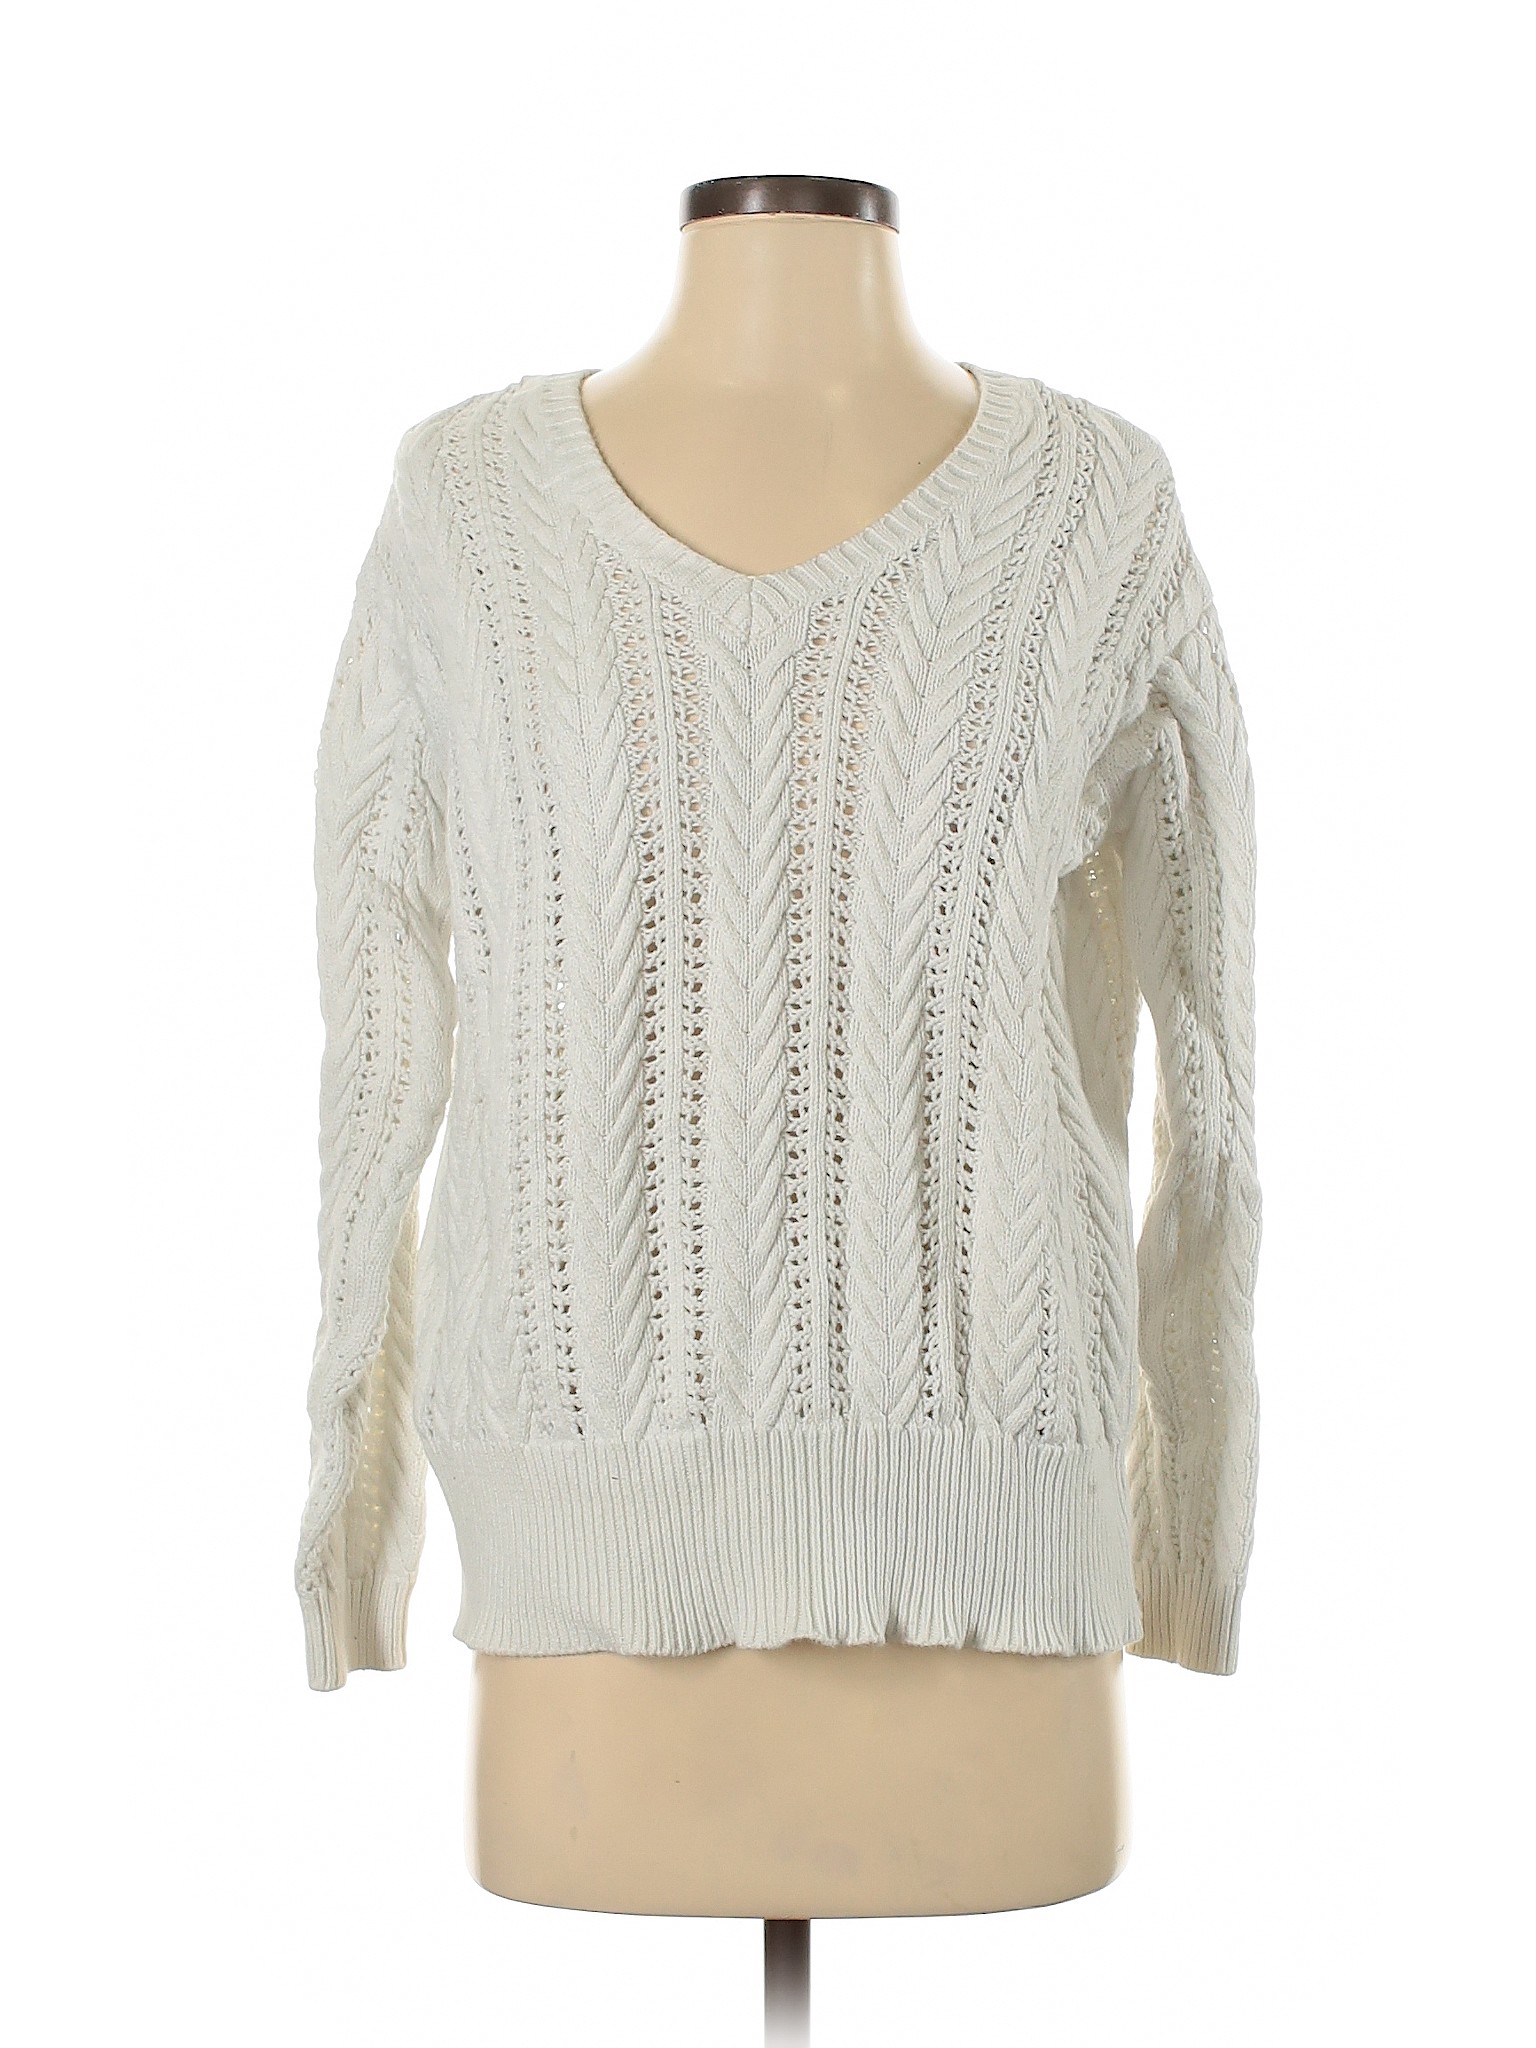 Zara Women White Pullover Sweater M | eBay